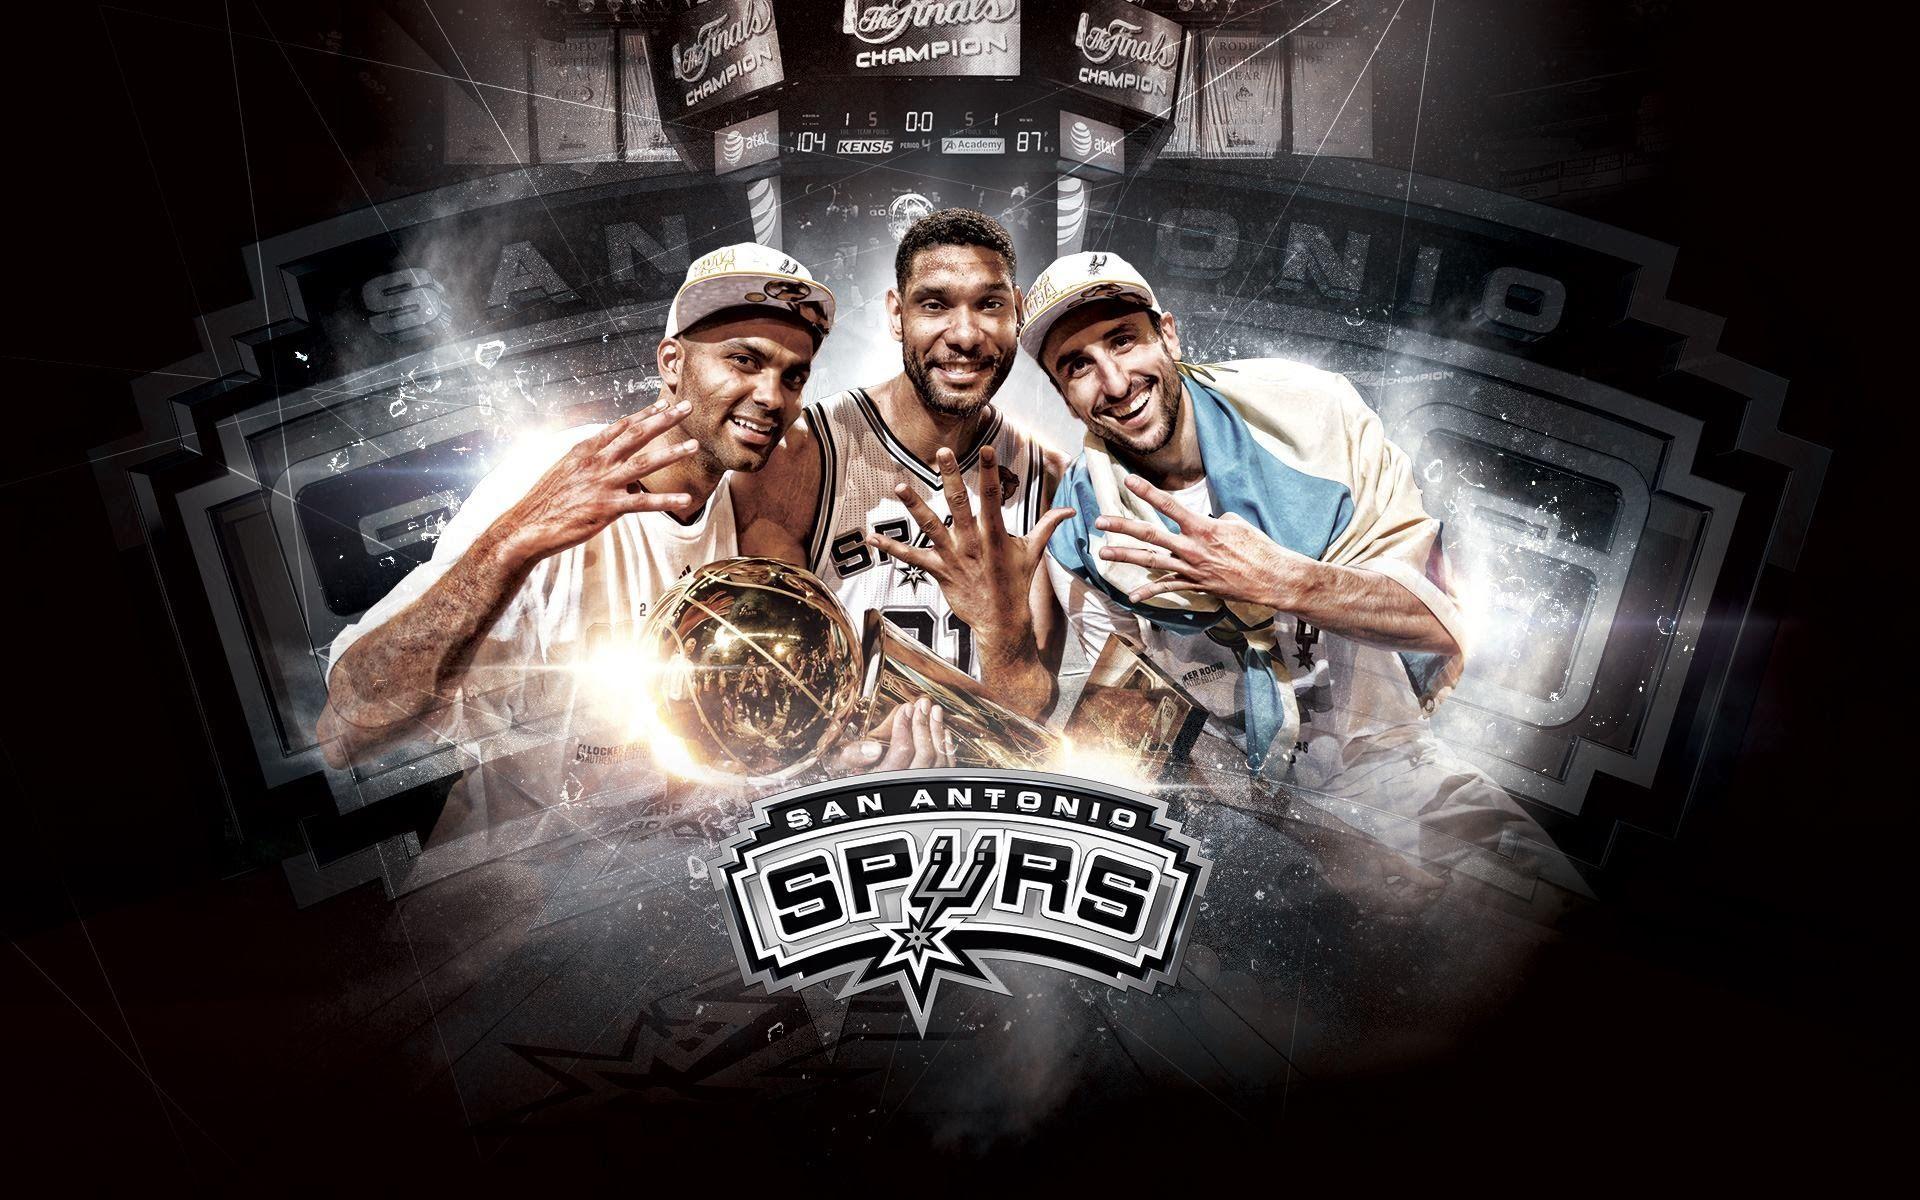 San Antonio Spurs 2014 Champions Wallpaper  Basketball Wallpapers at